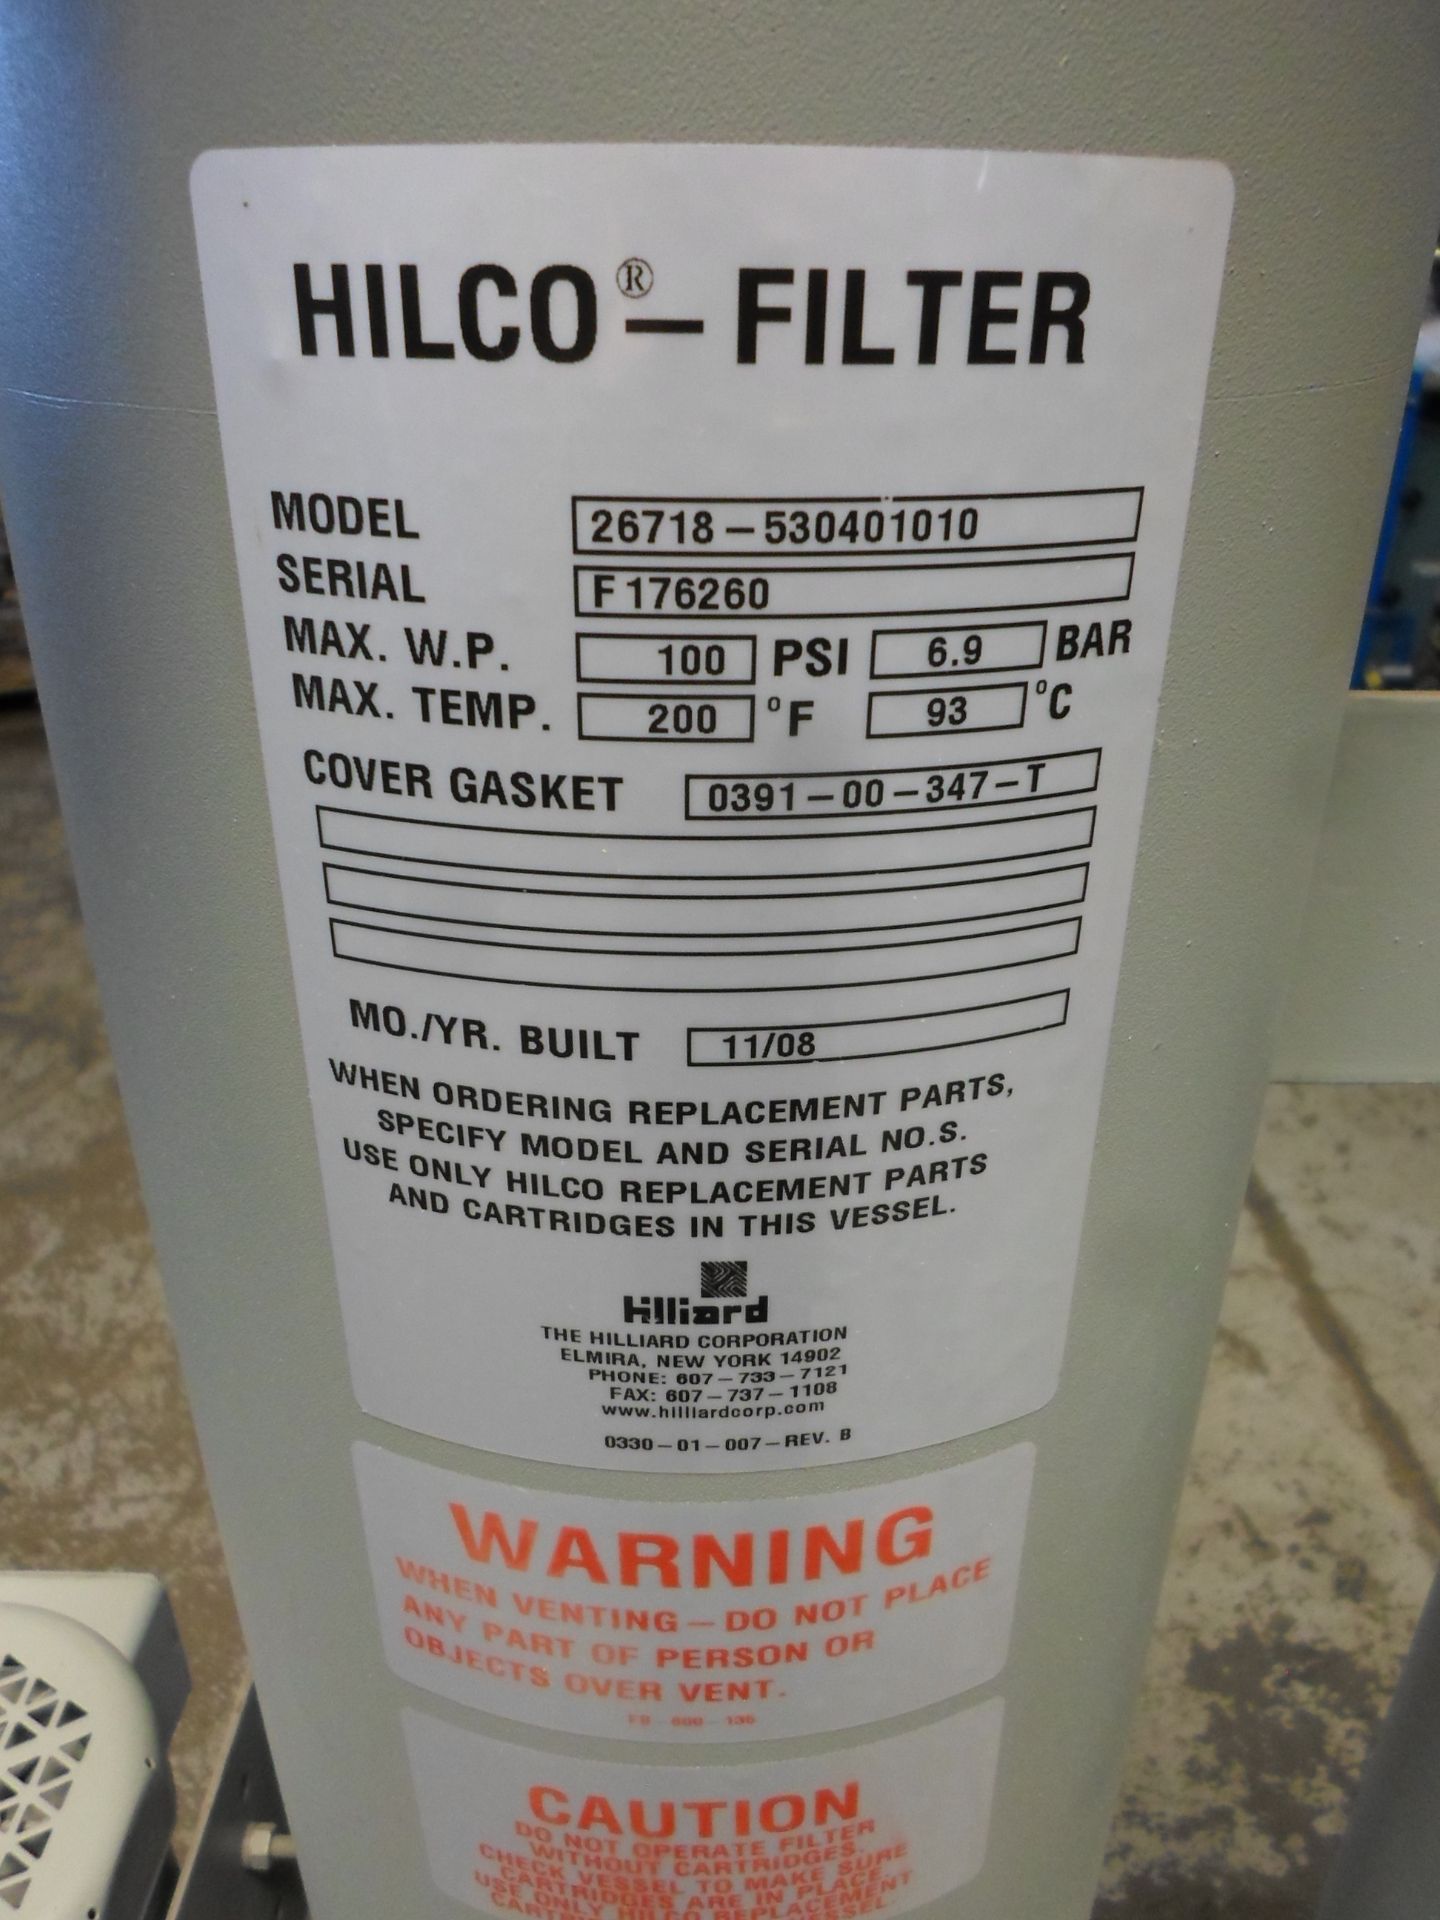 NEW 1/4 HP HILCO-FILTER OIL 26718-530401010 2008 MAX. W.P. 100PSI 6.9 BAR - Image 2 of 3